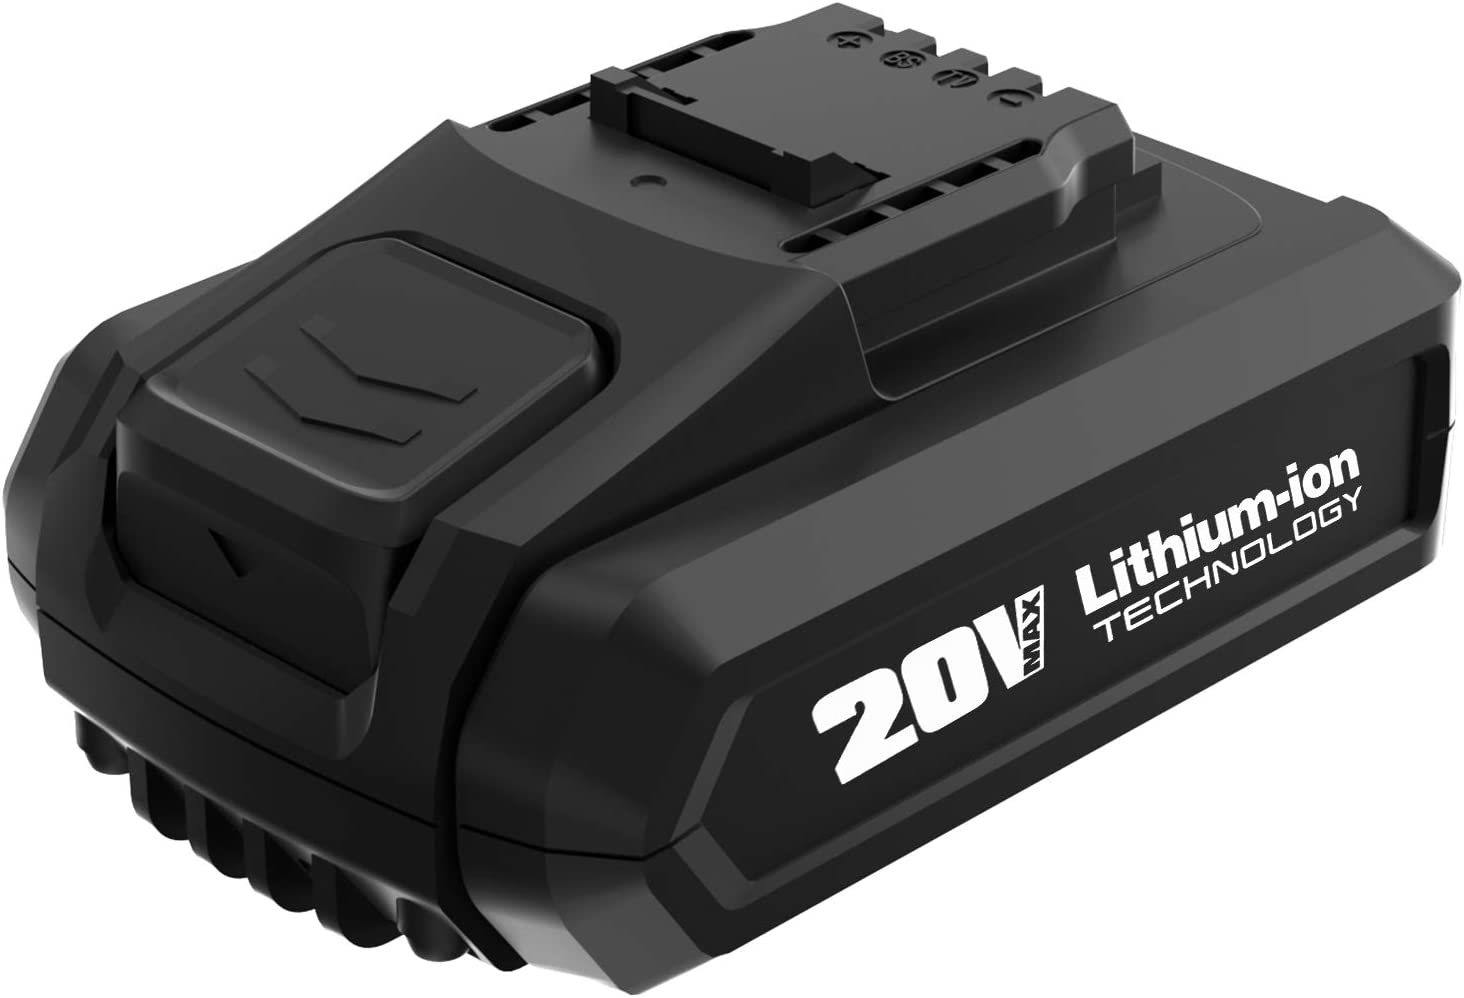 Wesco 2.0Ah Li-ion Battery Pack for 20V Cordless Tools